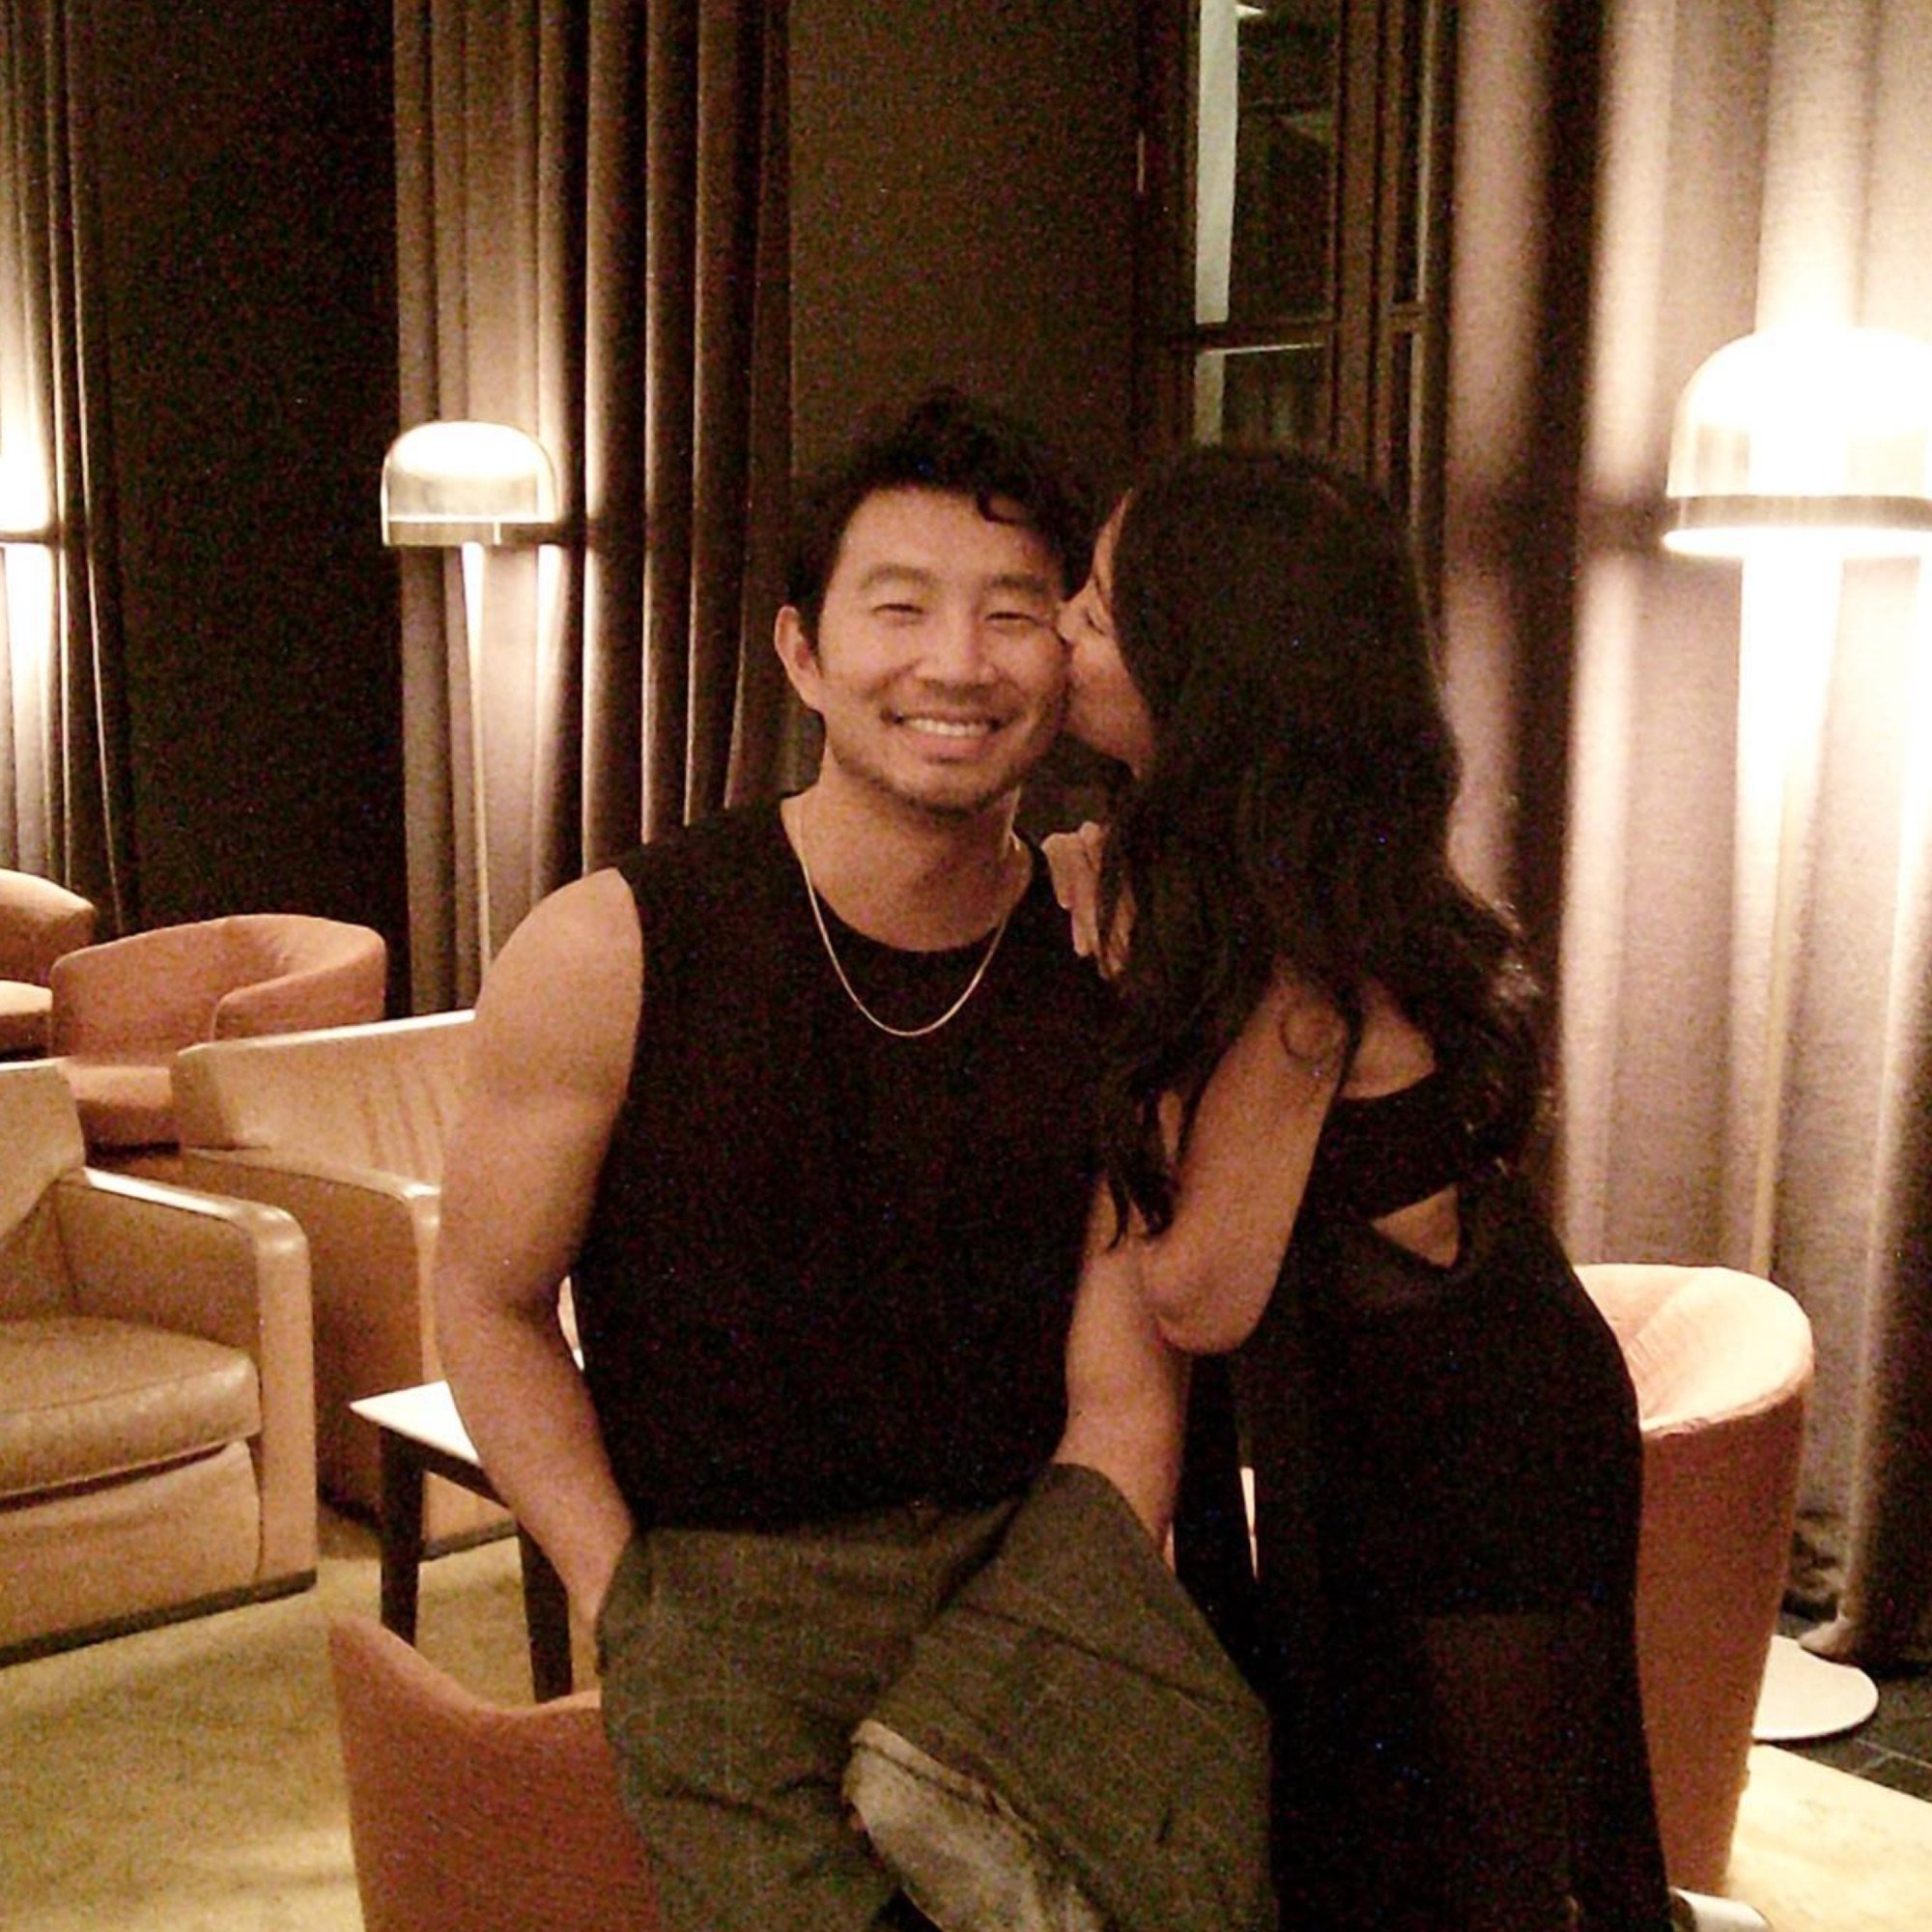 Simu Liu goes Instagram-official with girlfriend Allison Hsu